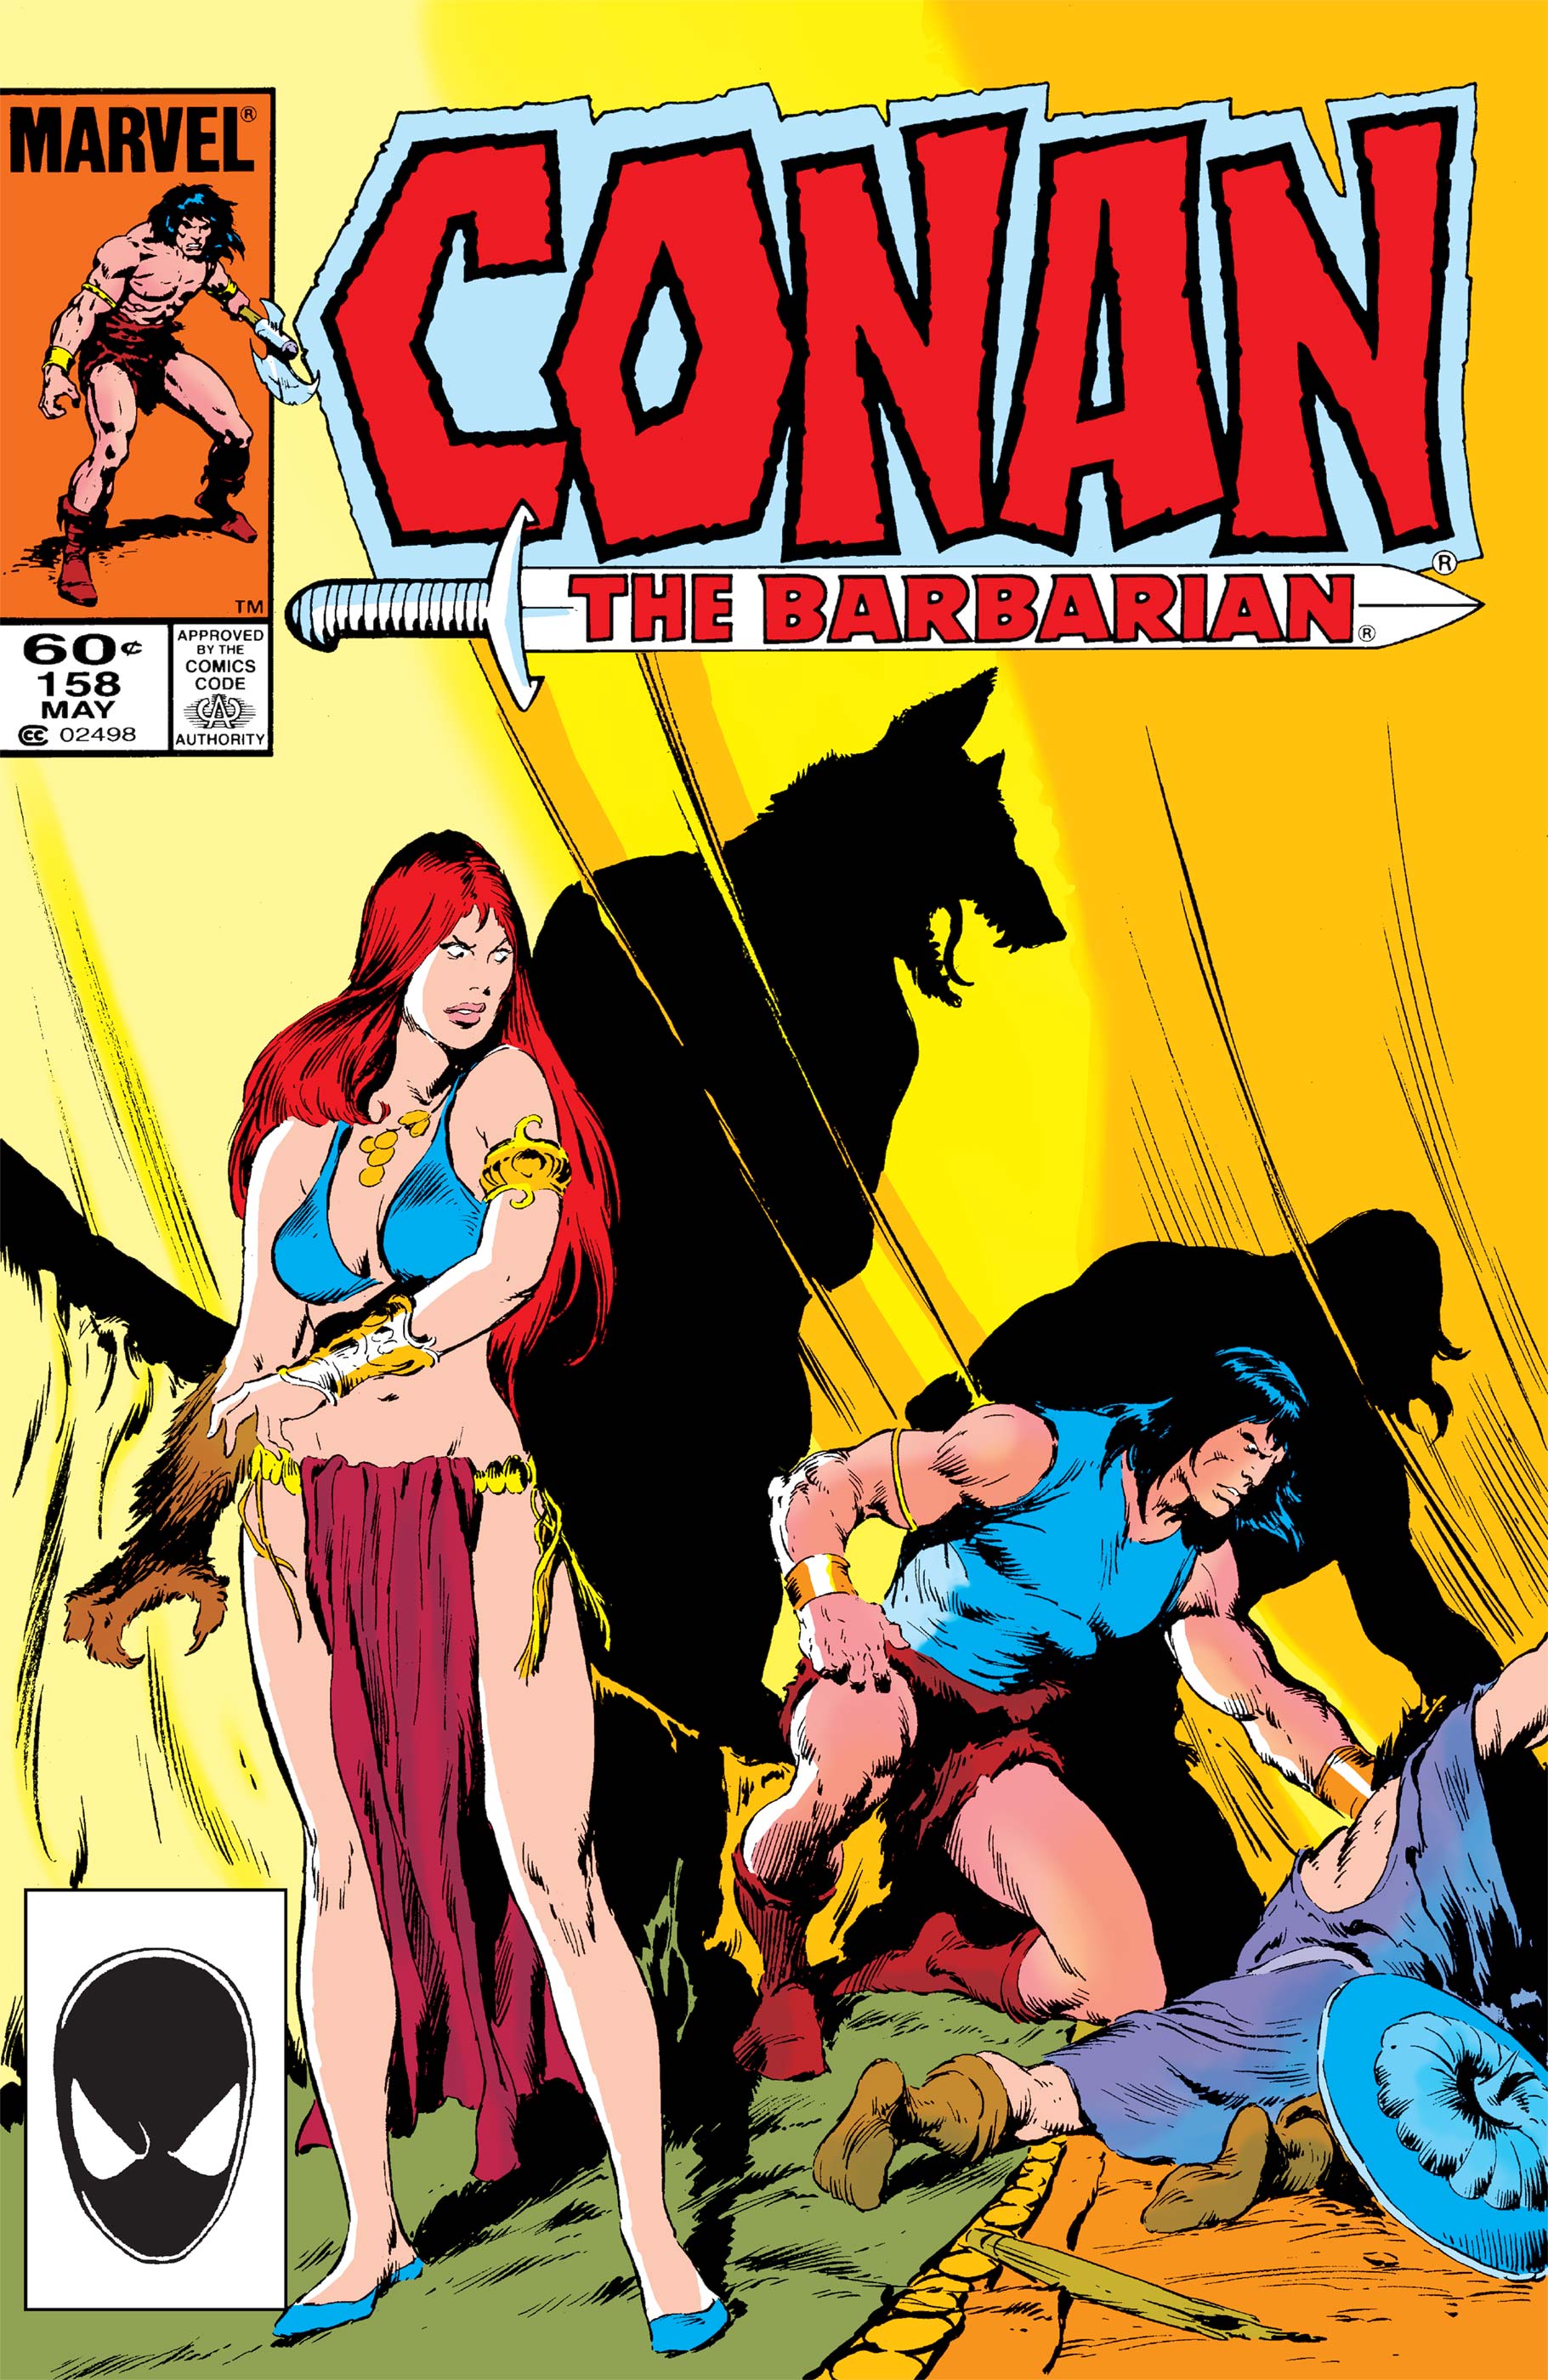 Conan the Barbarian (1970) #158